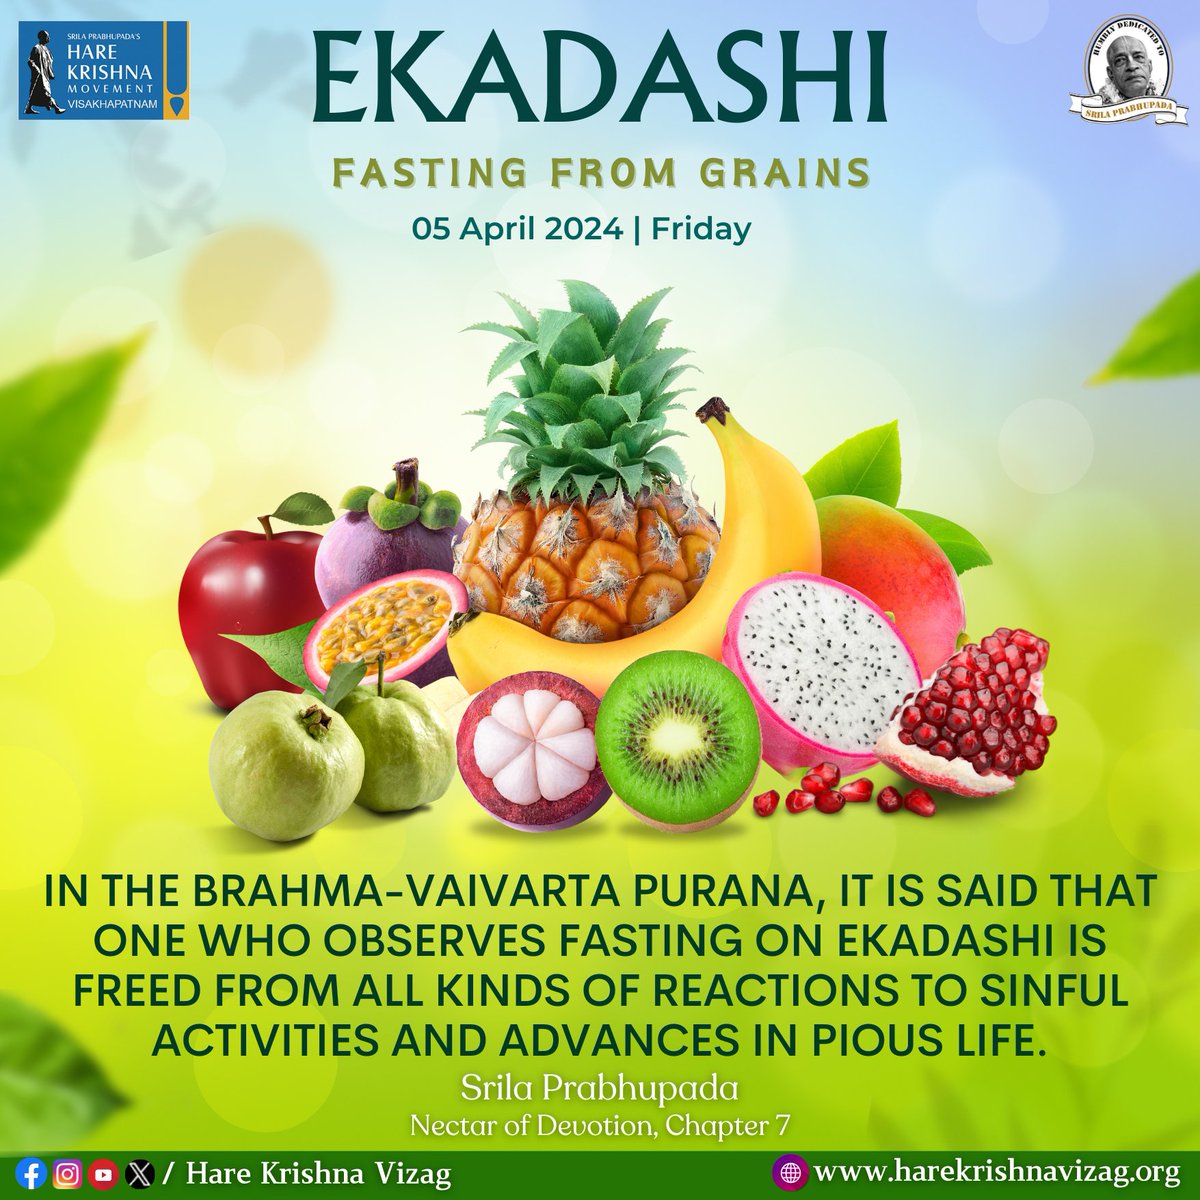 Tomorrow (Friday, 5 Apr 2024) is Papamocani Ekadashi ✨ Fasting from grains. #ekadashi #krishna #hkm #srilaprabhuapda #iskcon #fasting #lifestyle #intermittentfast #vizag